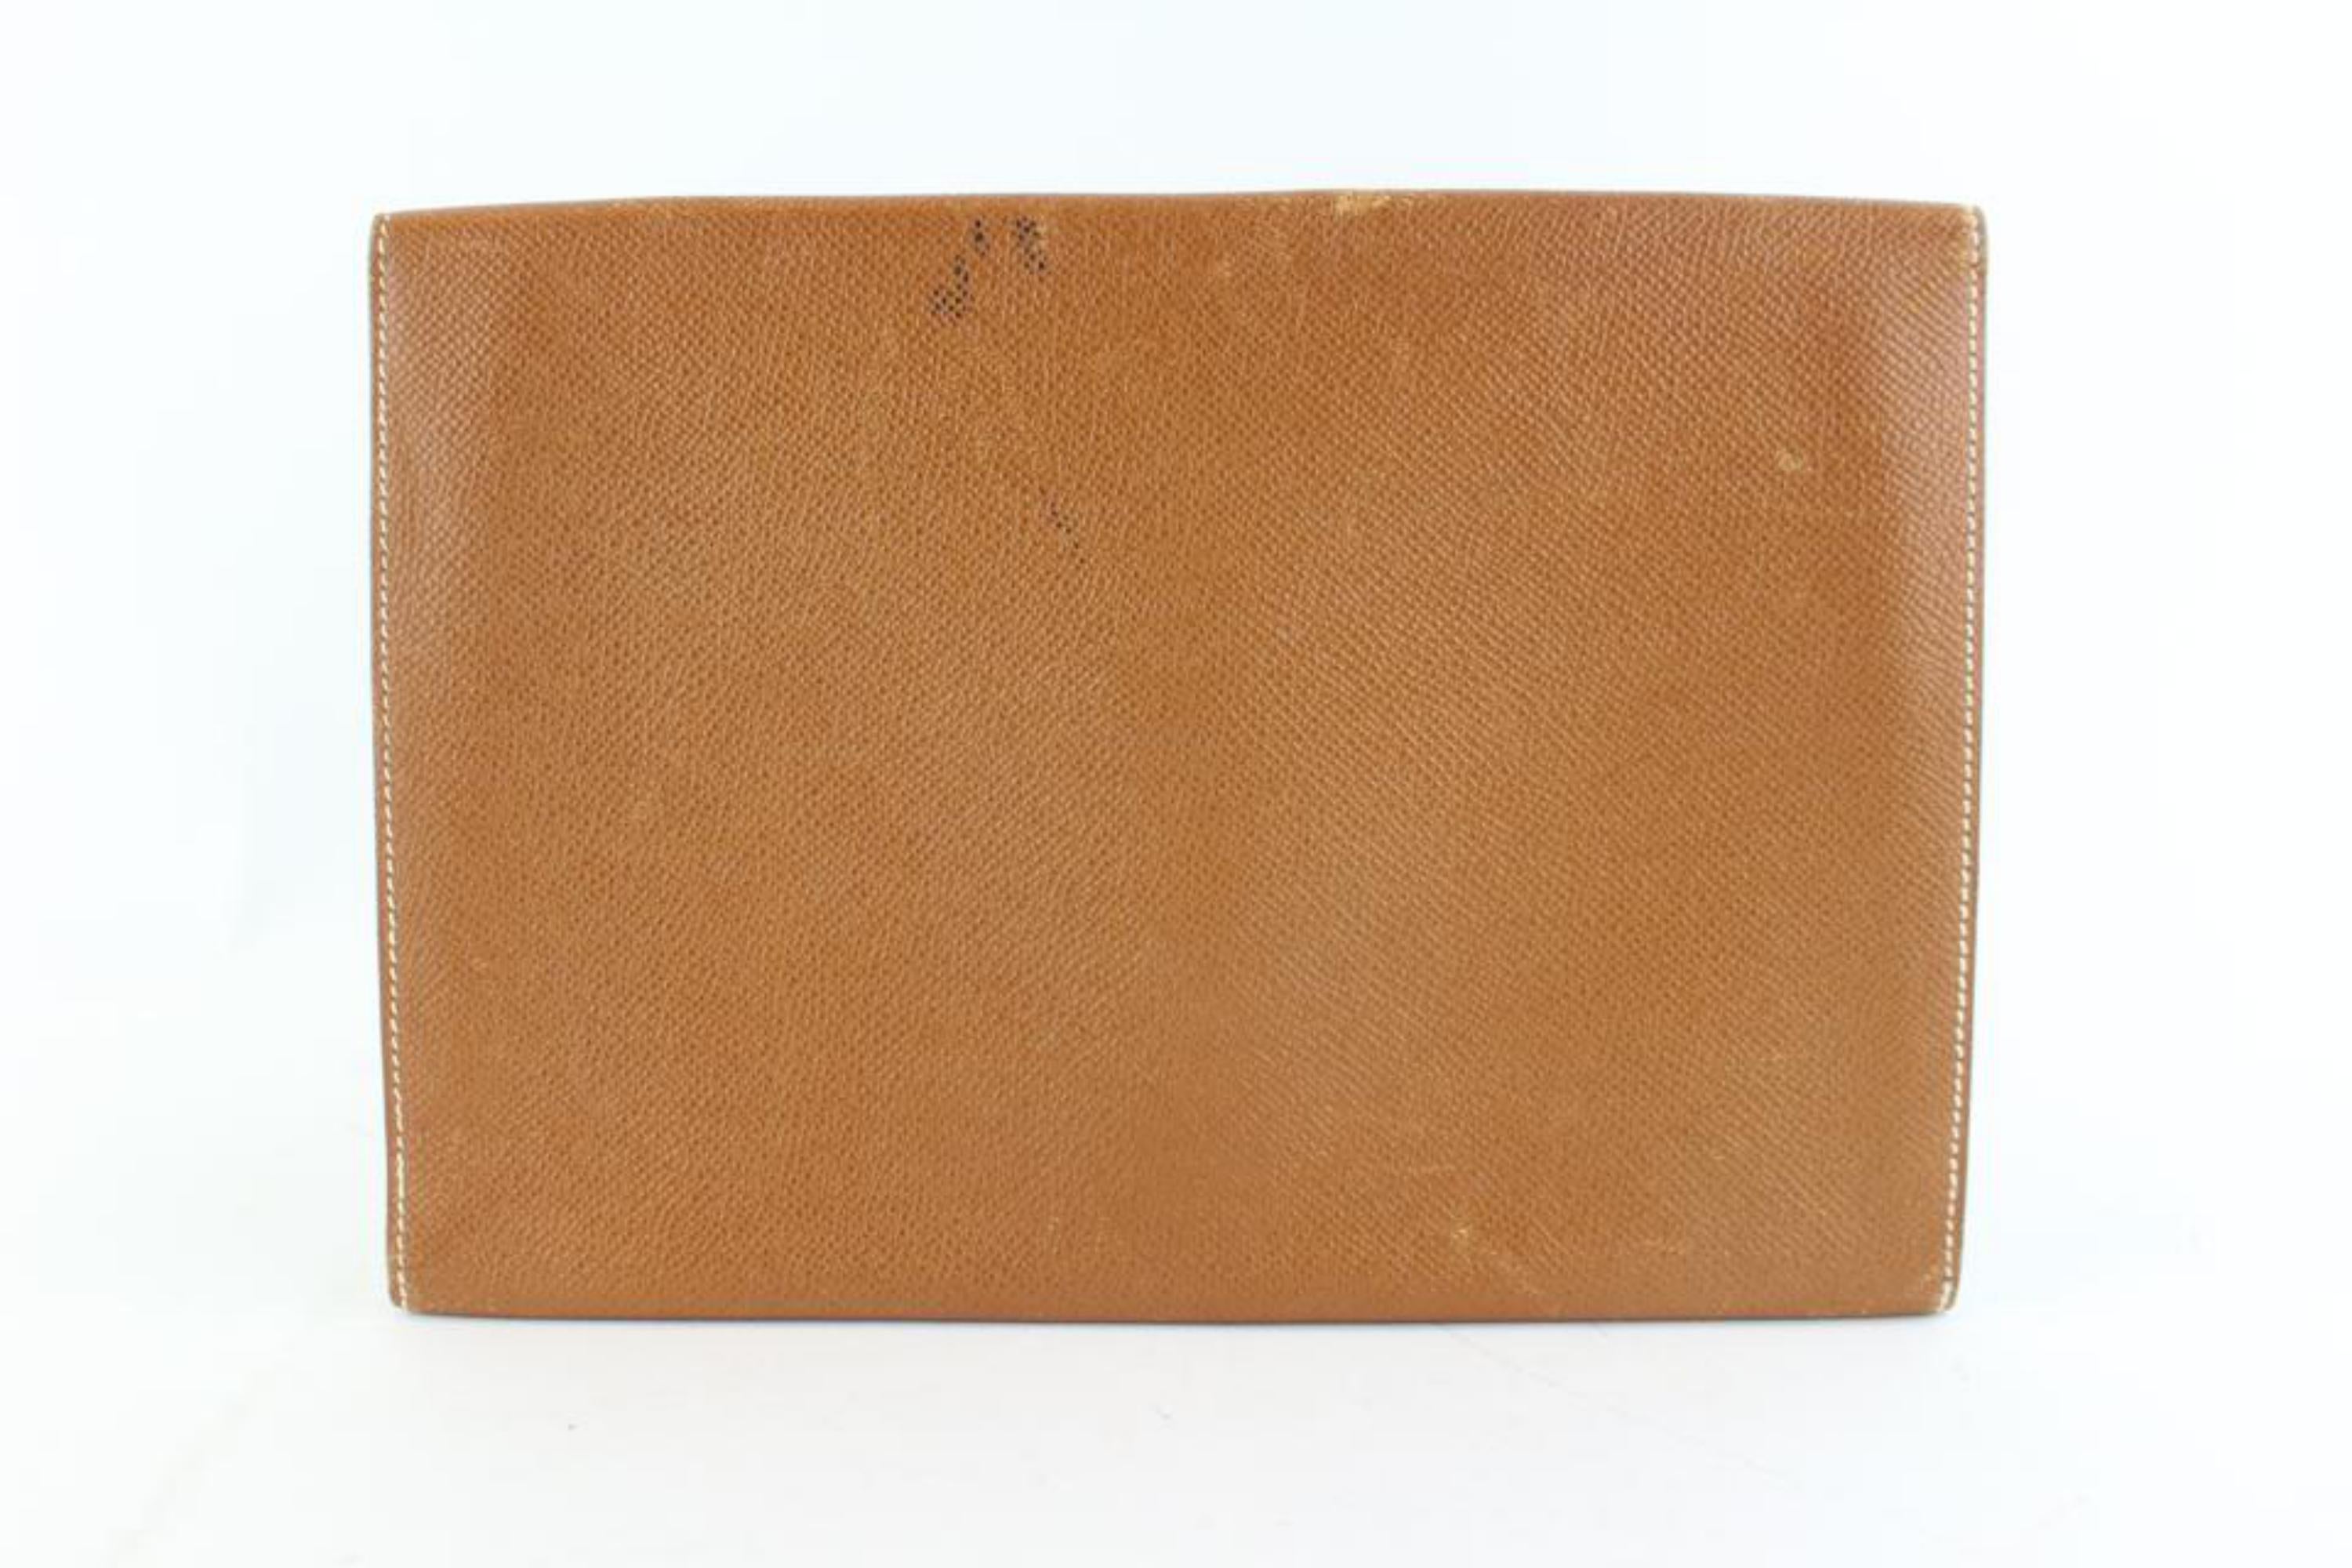 Hermès Pochette Rio Envelope 7hz1128 Brown Leather Clutch For Sale 4